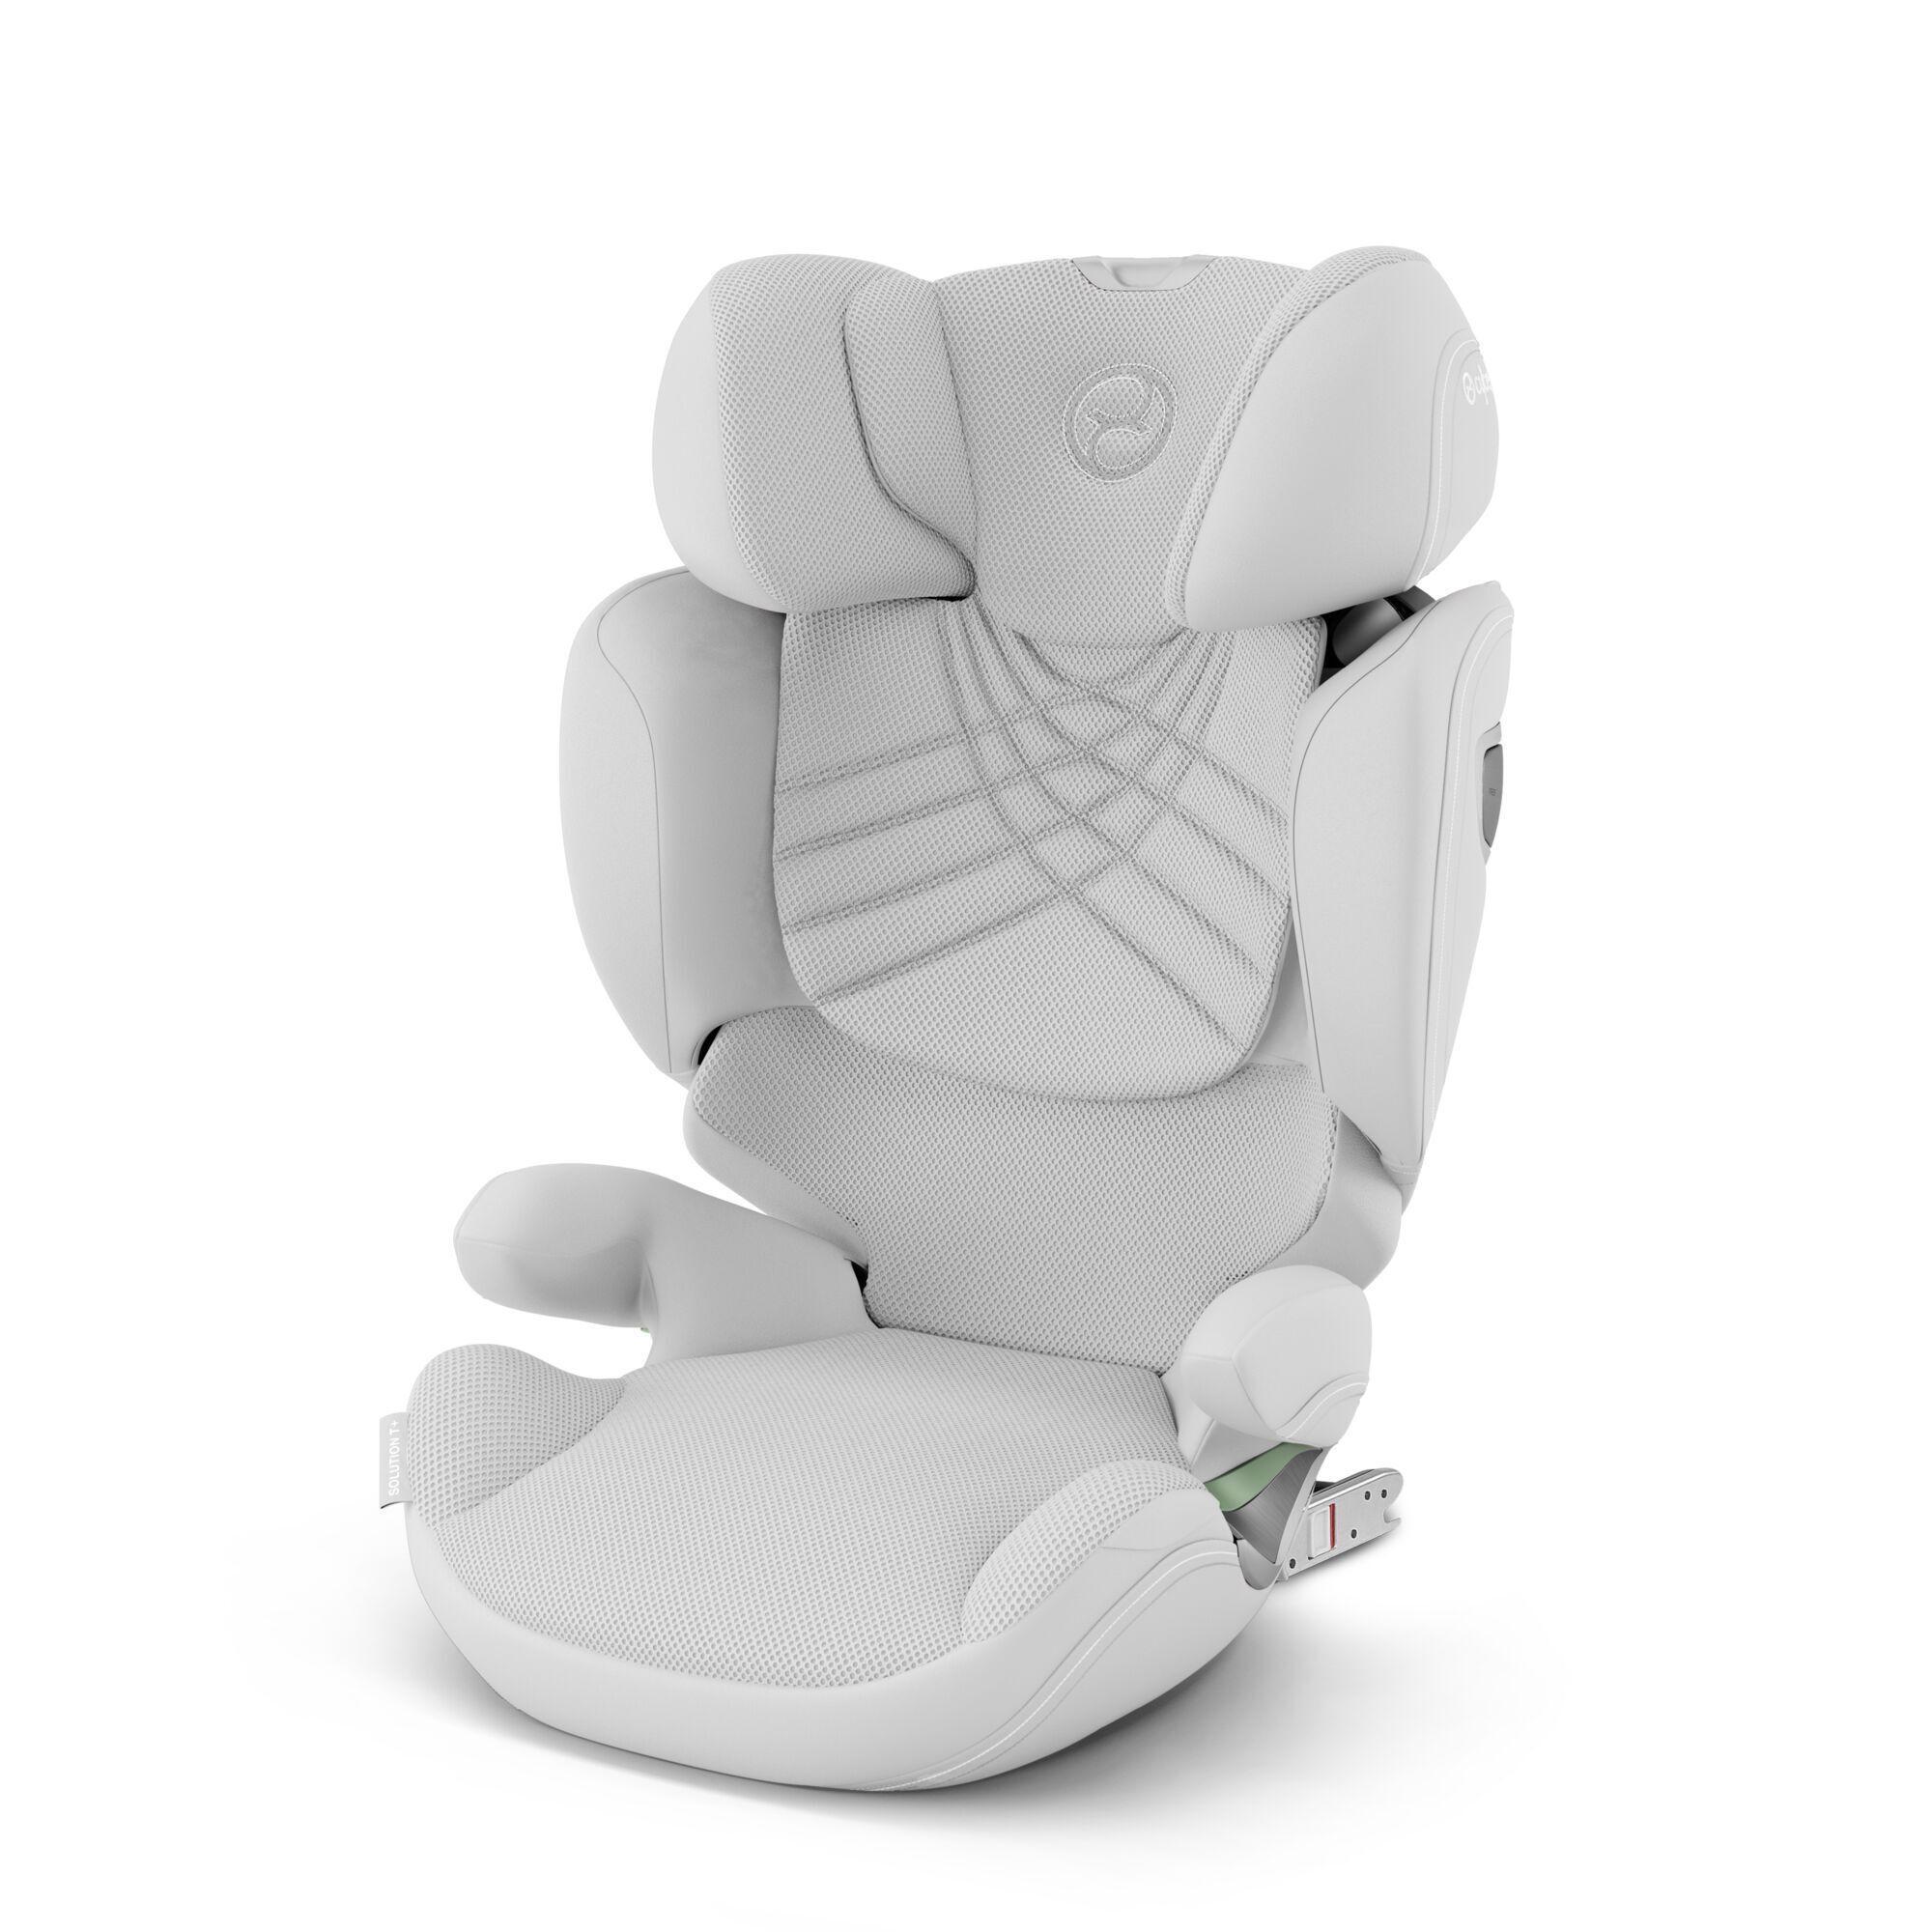 Cybex Solution T i-fix Car Seat: Safe & Comfy